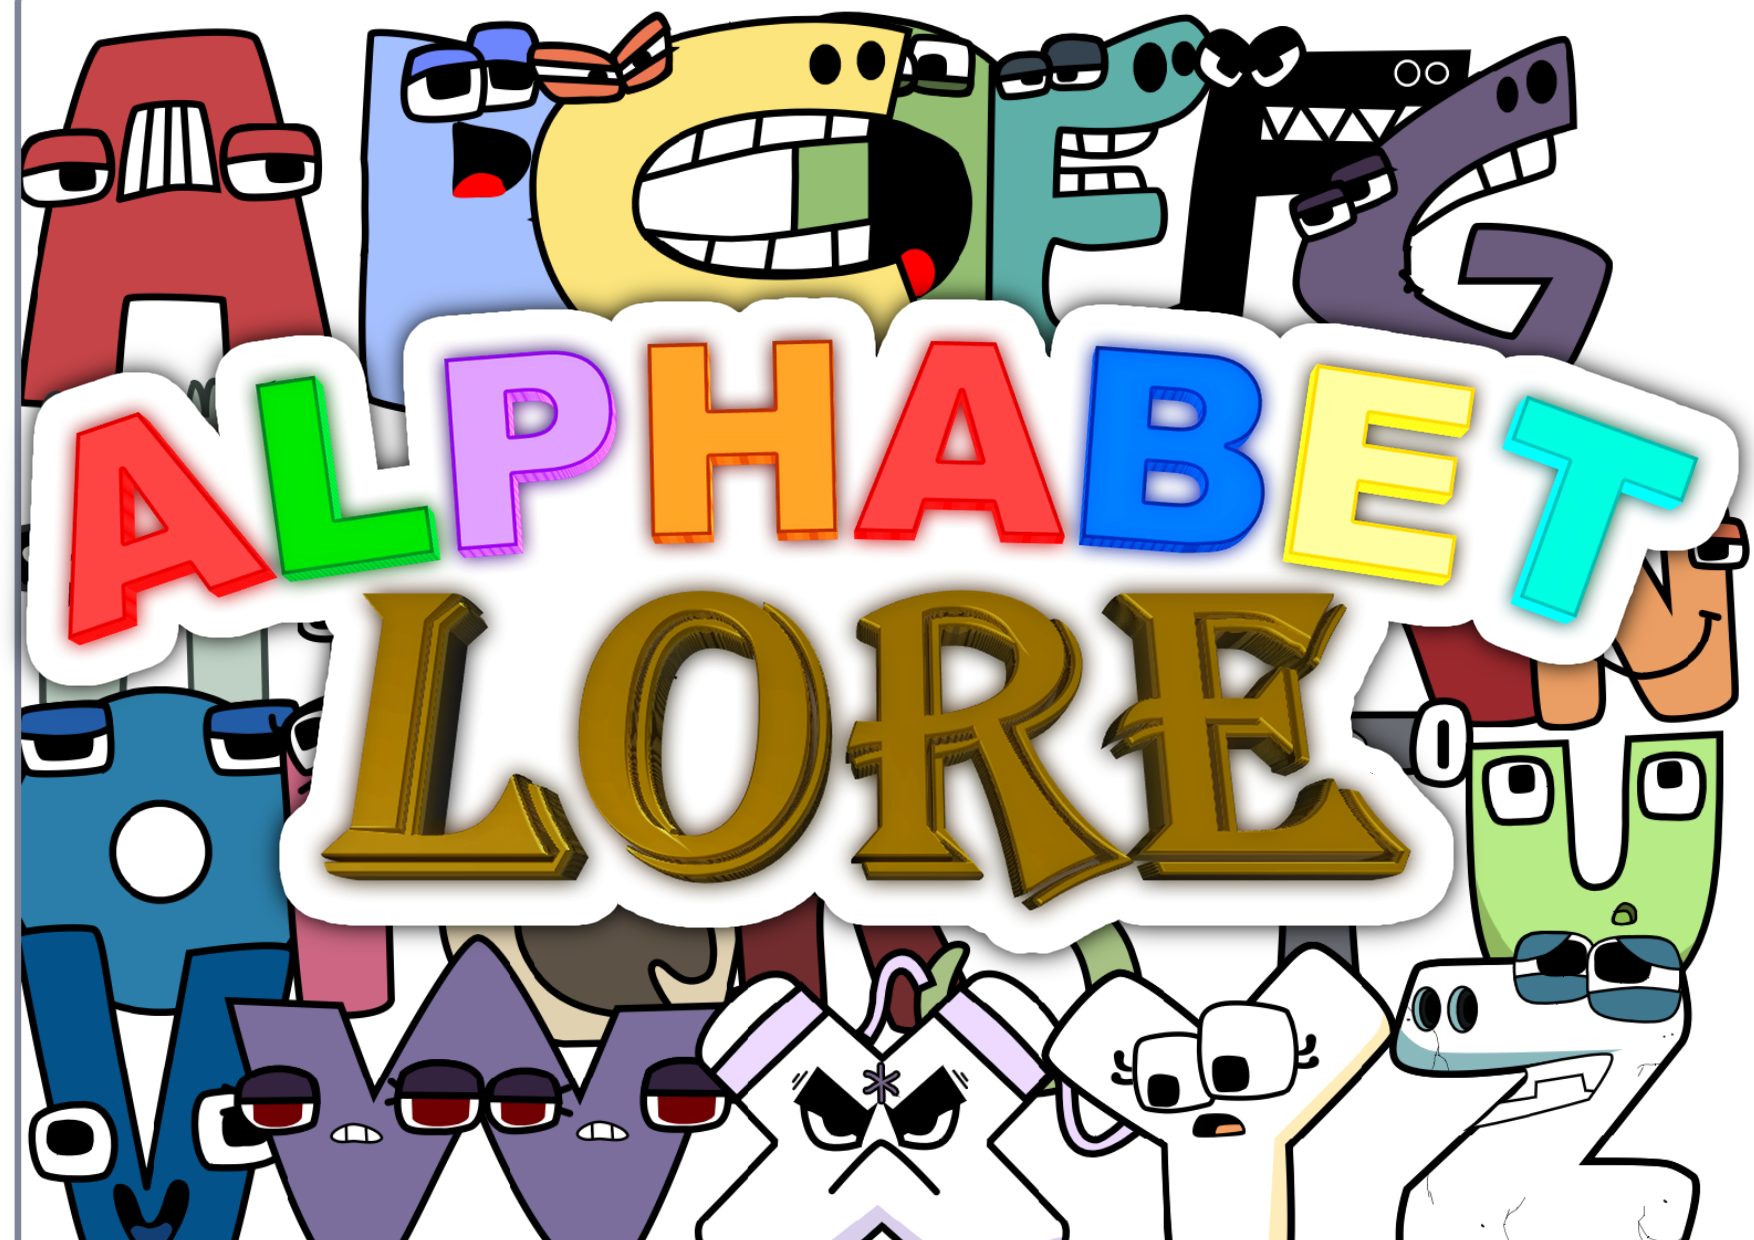 Alphabet Lore Cast But Read Description! by BobbyInteraction5 on